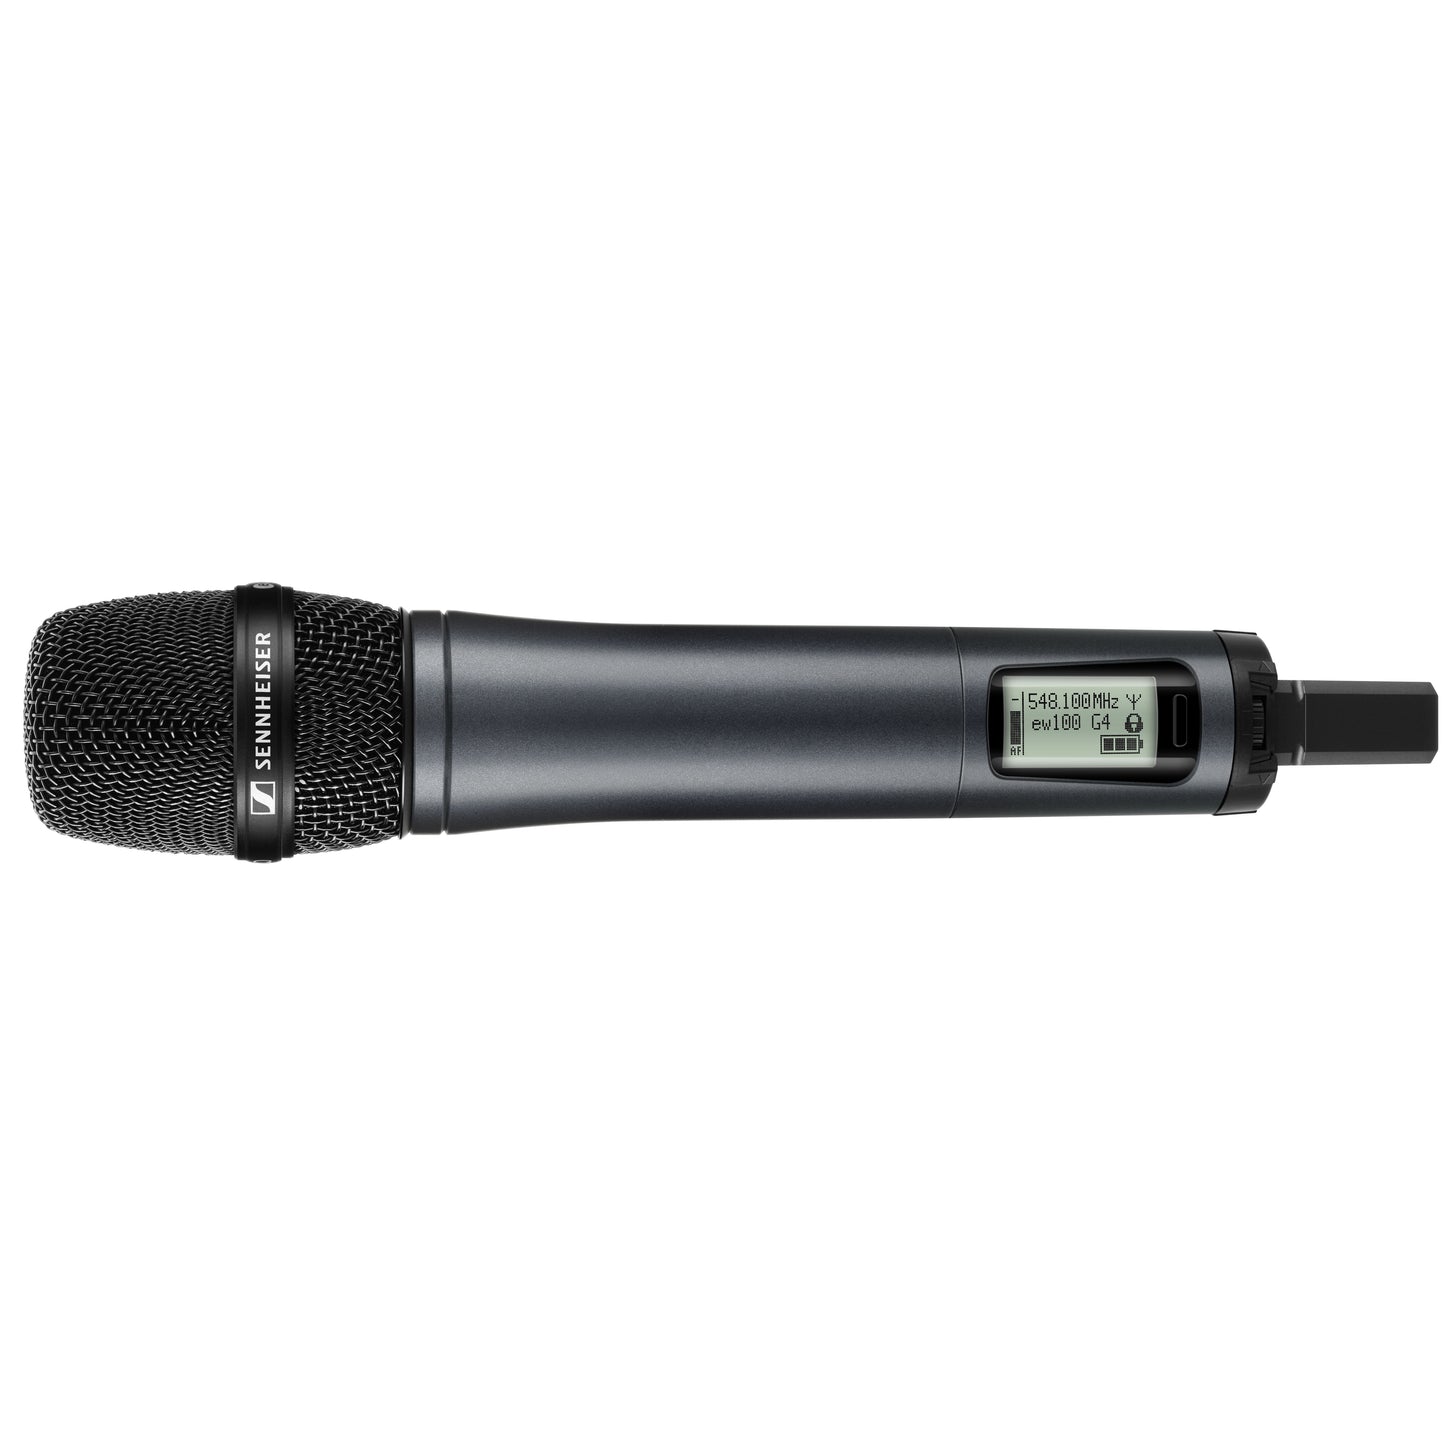 Sennheiser ew100 G4 e865 Vocal Wireless Microphone System, Band A1 (470-516 MHz)